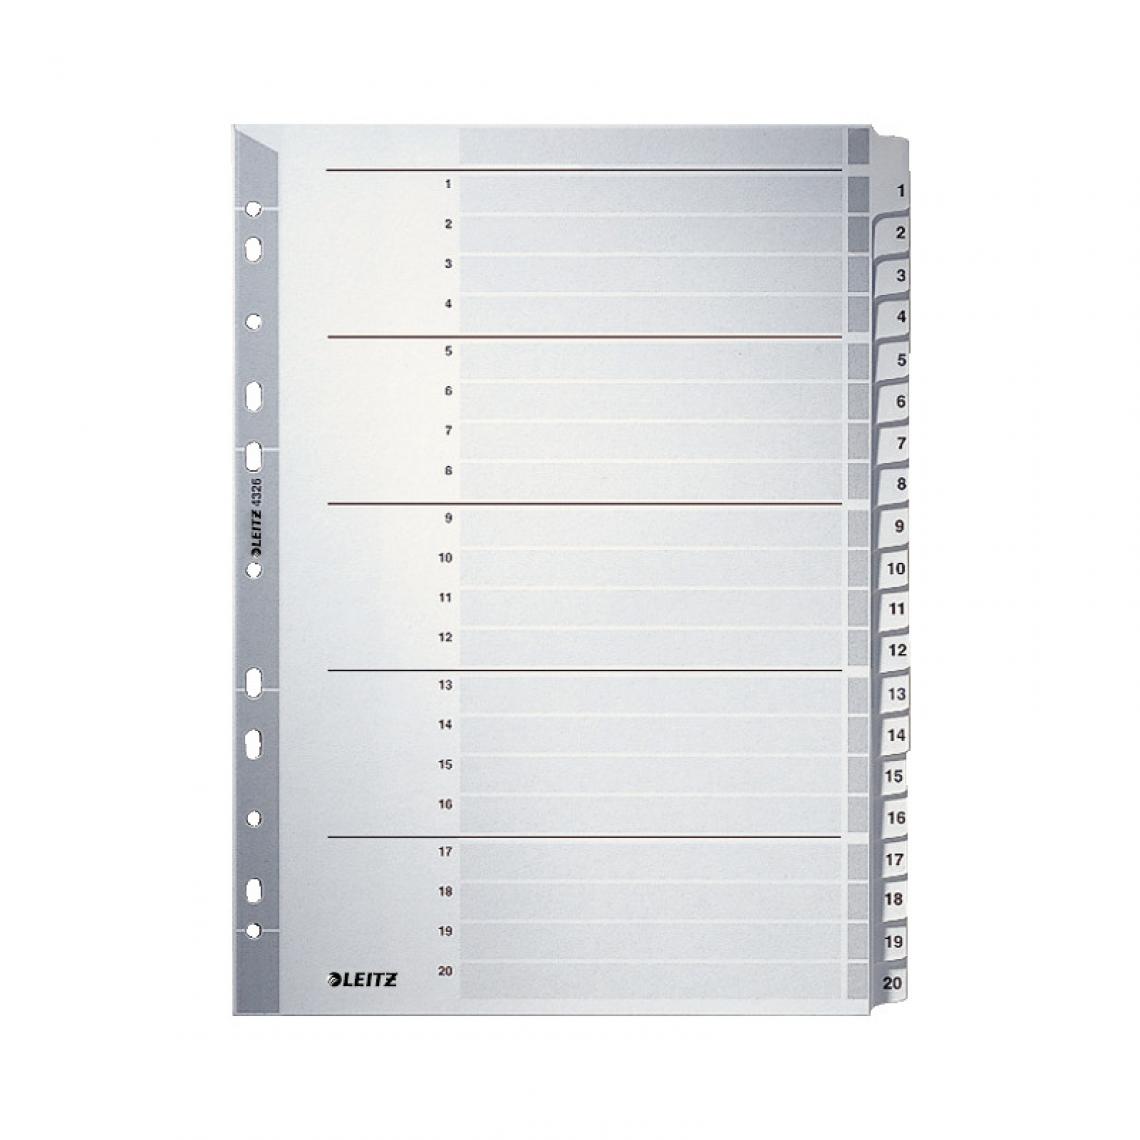 Leitz - LEITZ Intercalaires en carton mylar, chiffres ,A4, 1-20,gris () - Accessoires Bureau